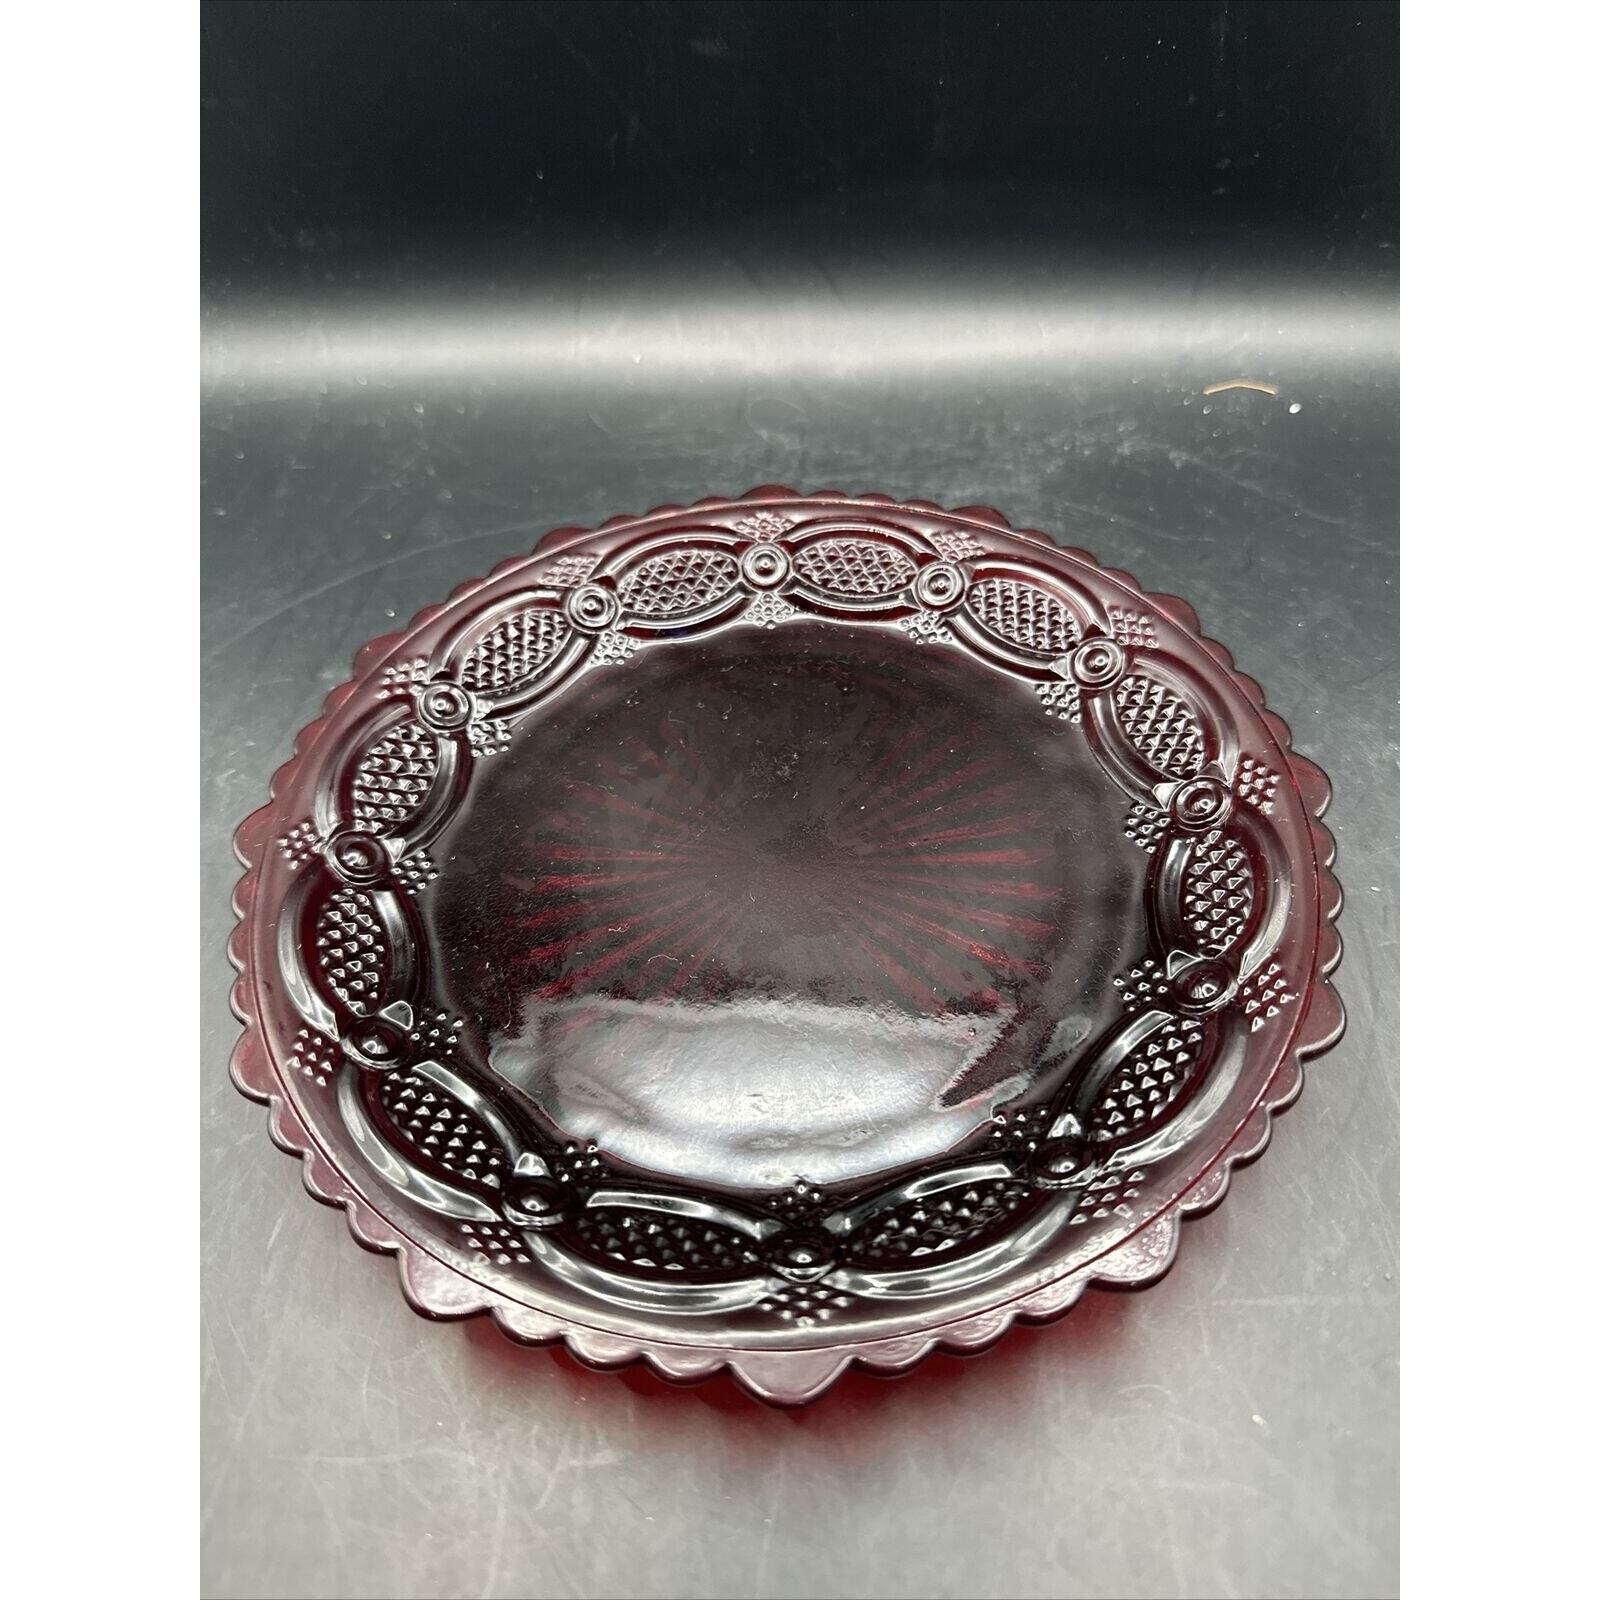 Vintage Avon Ruby Red Cape Cod 1876 Glassware Dessert/Salad Plate (7 1/2 inches)